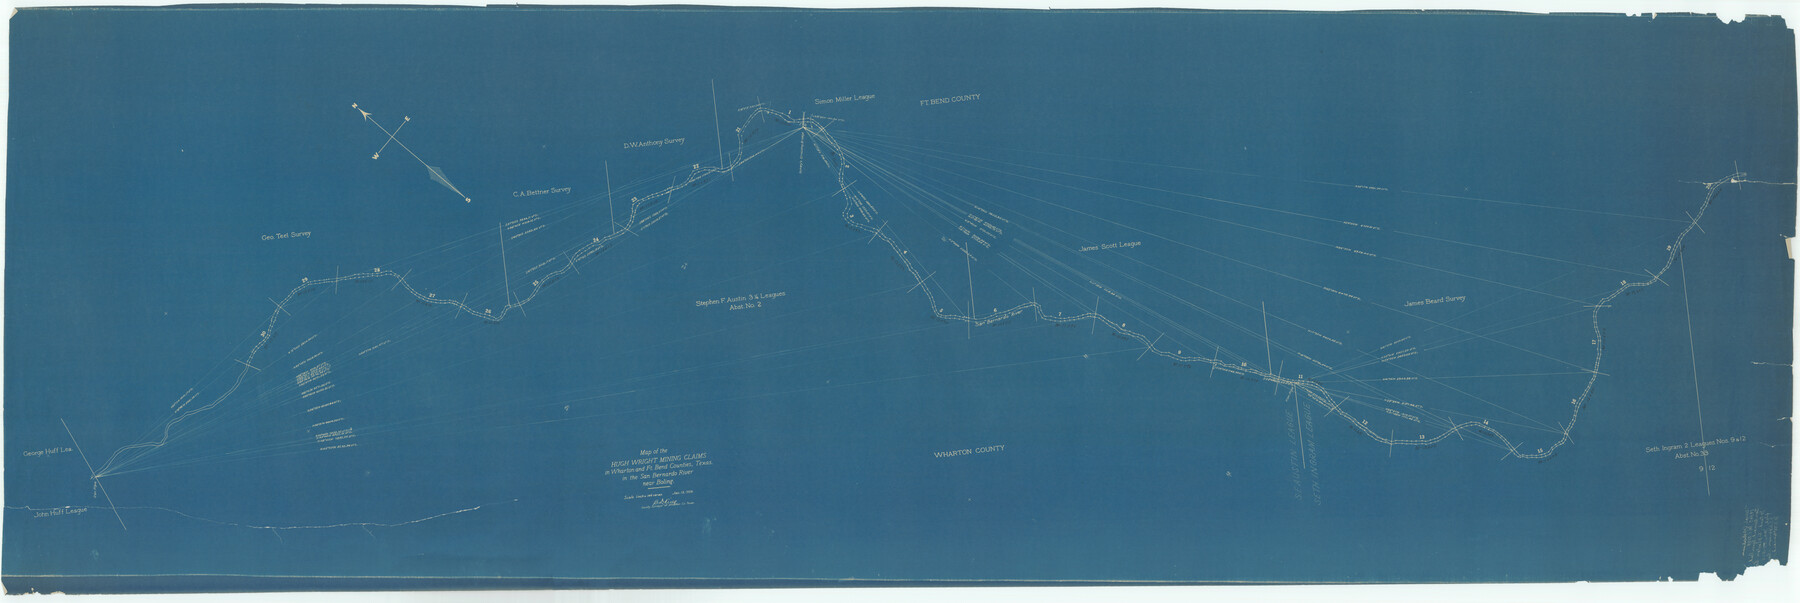 65659, [Sketch for Mineral Application 19560 - 19588 - San Bernard River], General Map Collection